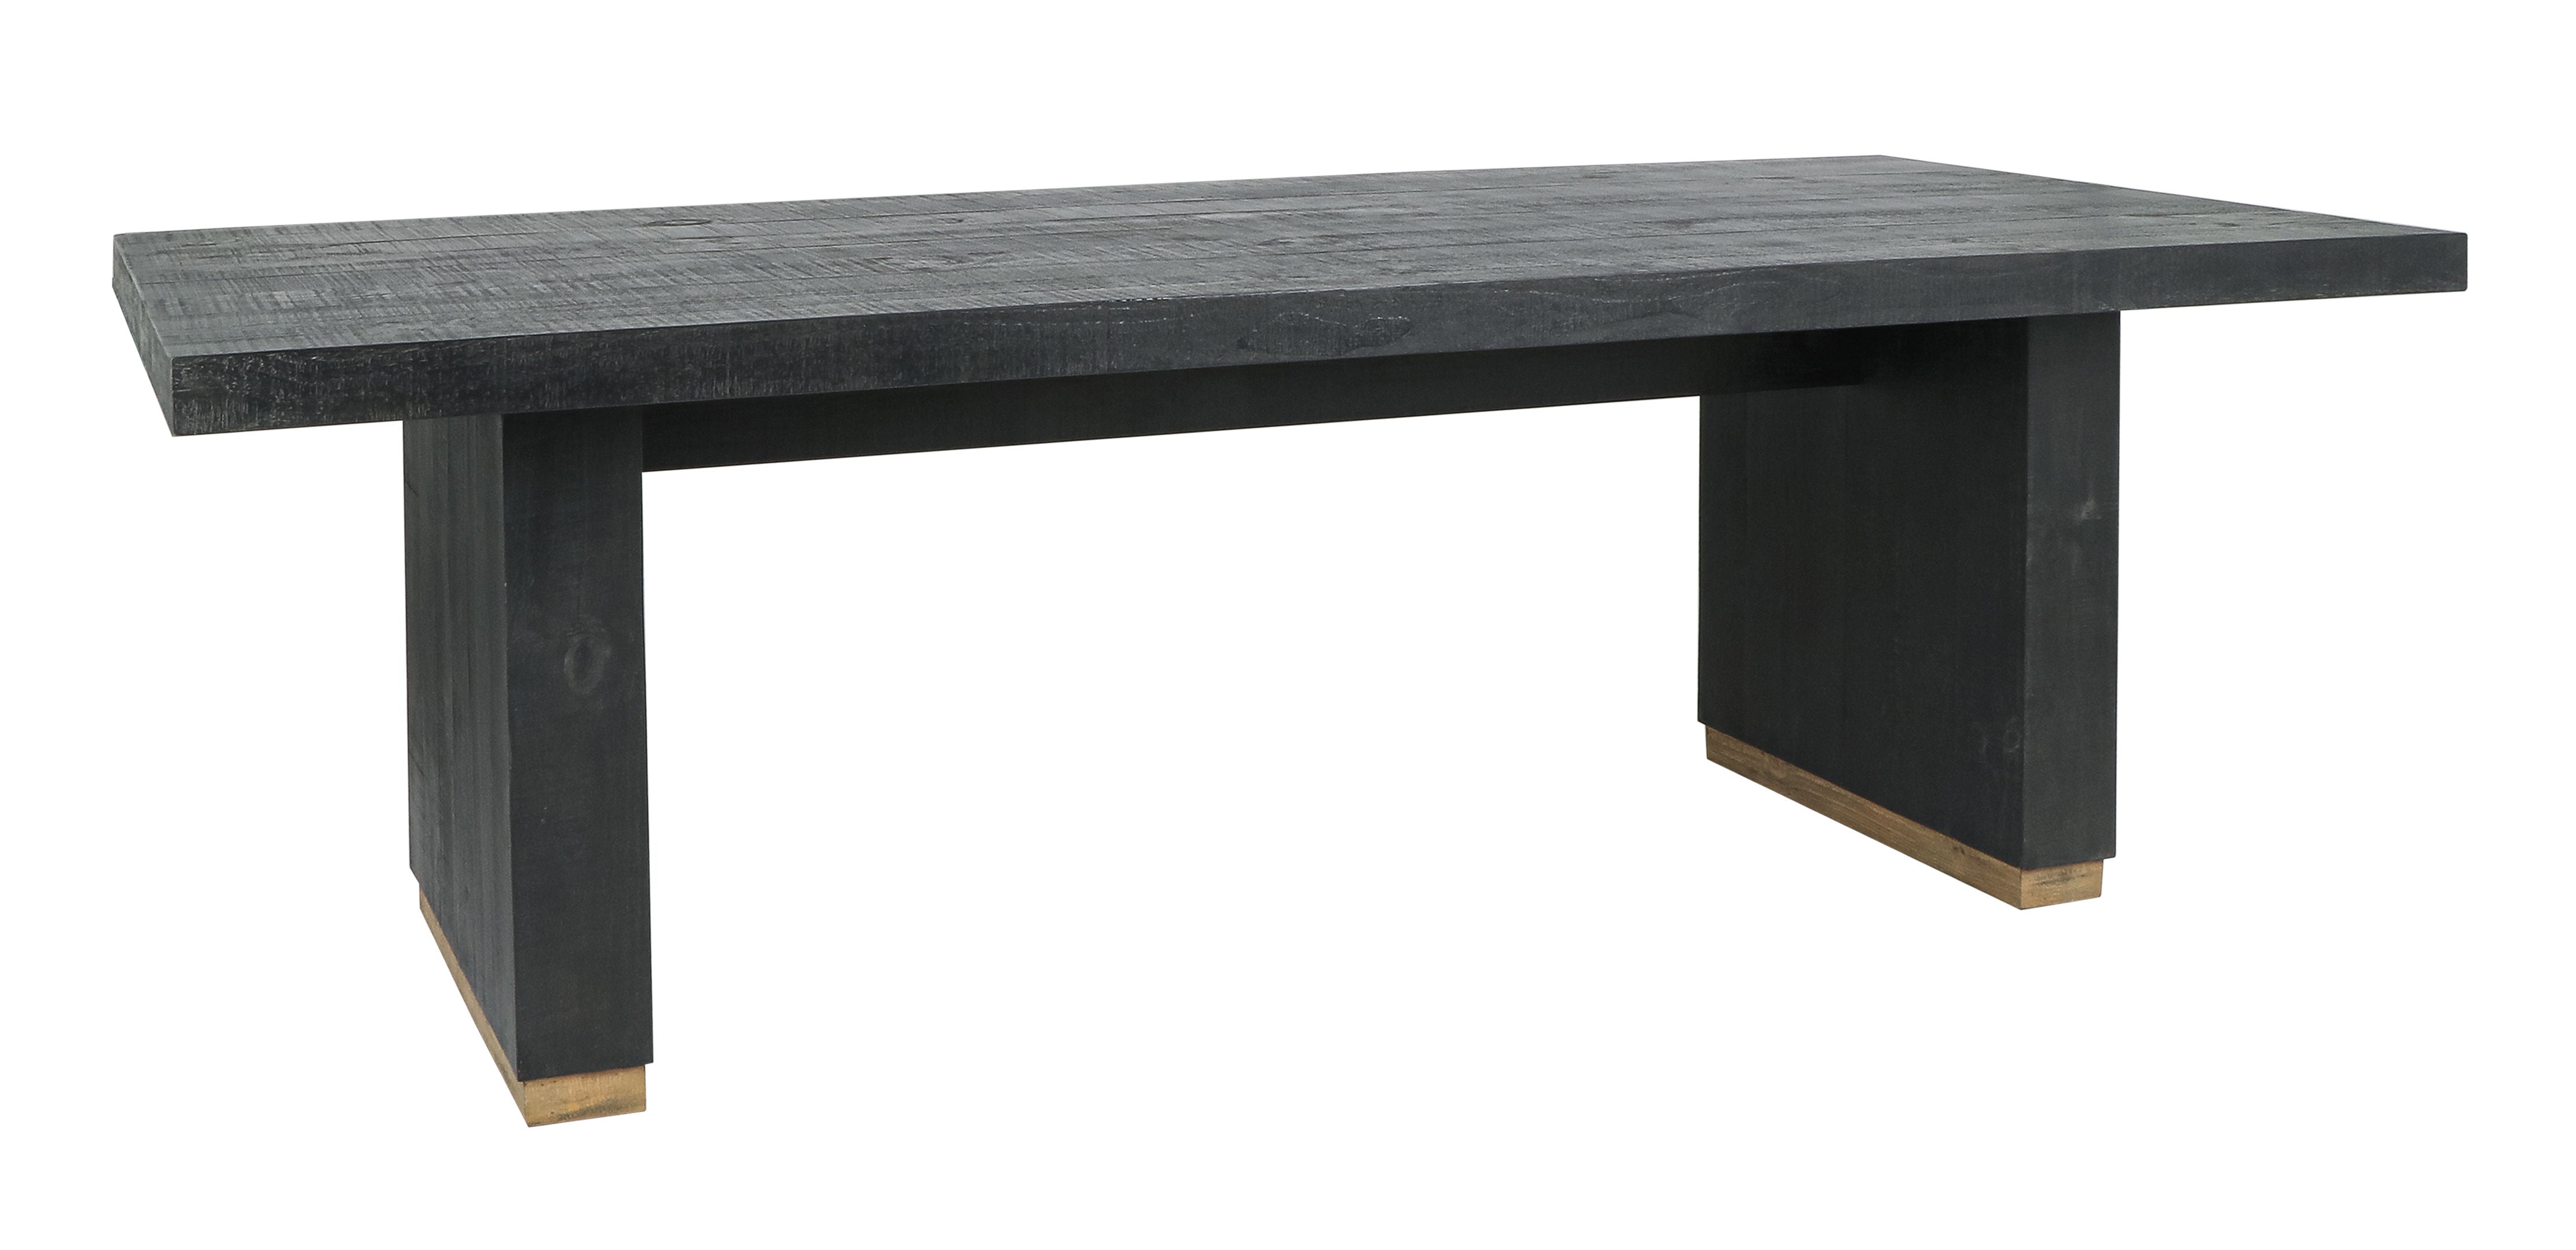 Lynx - Reclaimed Wood Dining Table